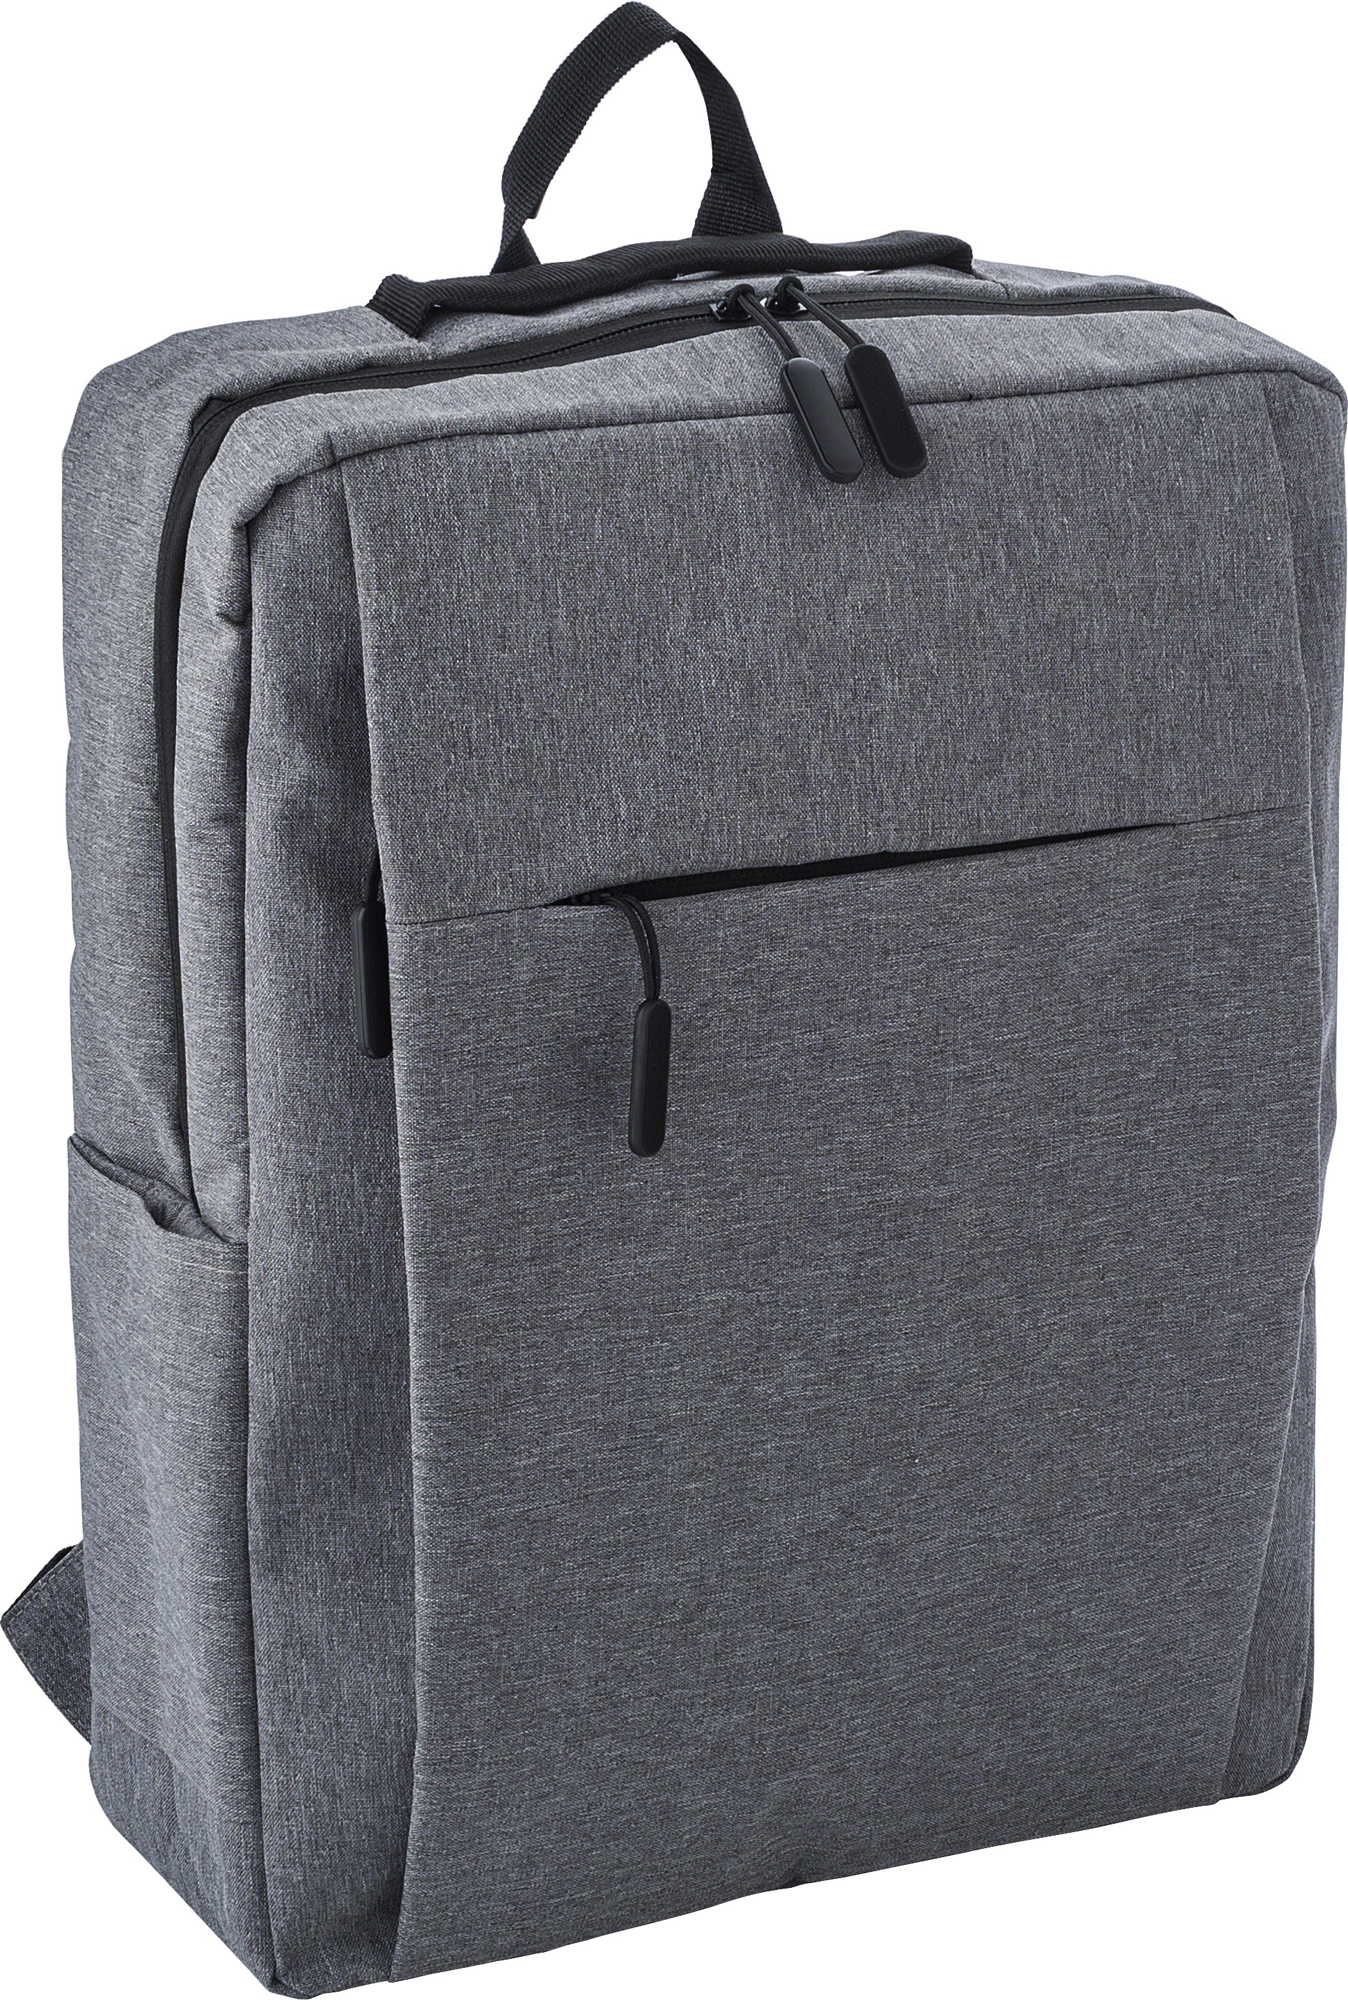 000000864735 003999999 3d135 lft pro01 2022 fal - Land Polyester backpack